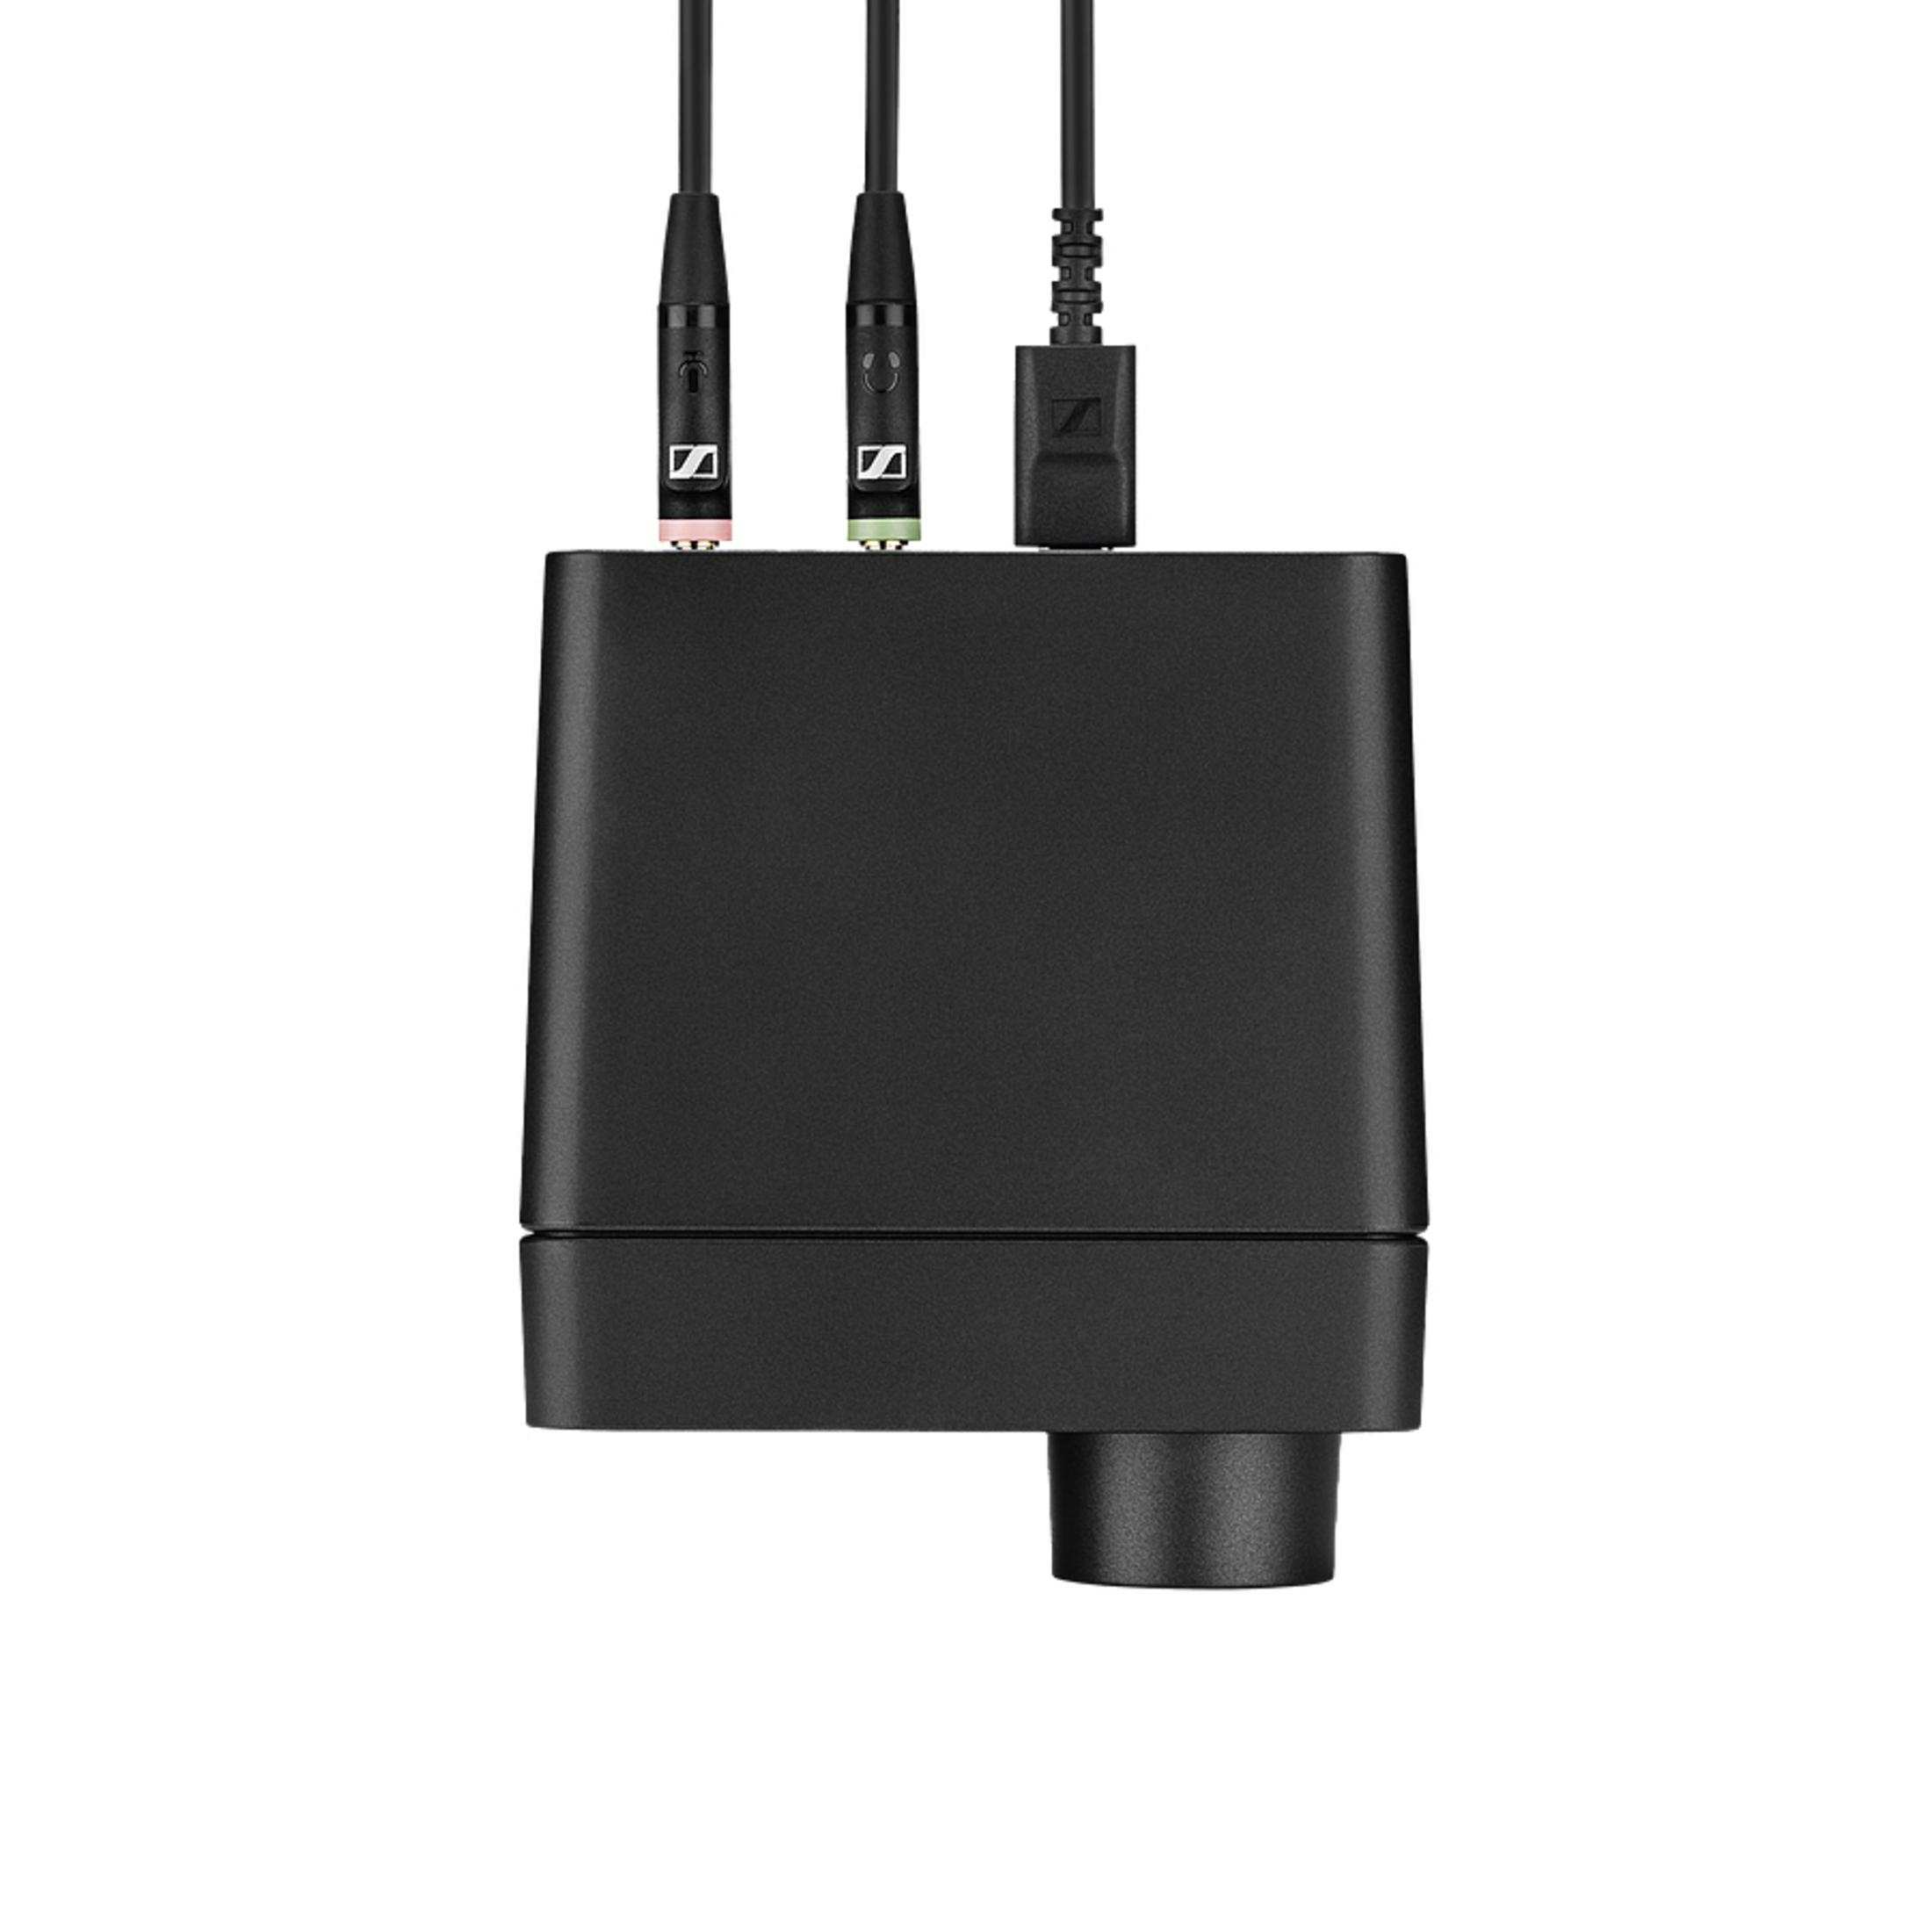 EPOS 1001166 Over-ear OPEN BUNDLE Schwarz H6PRO Gaming Headset BLACK, AUDIO